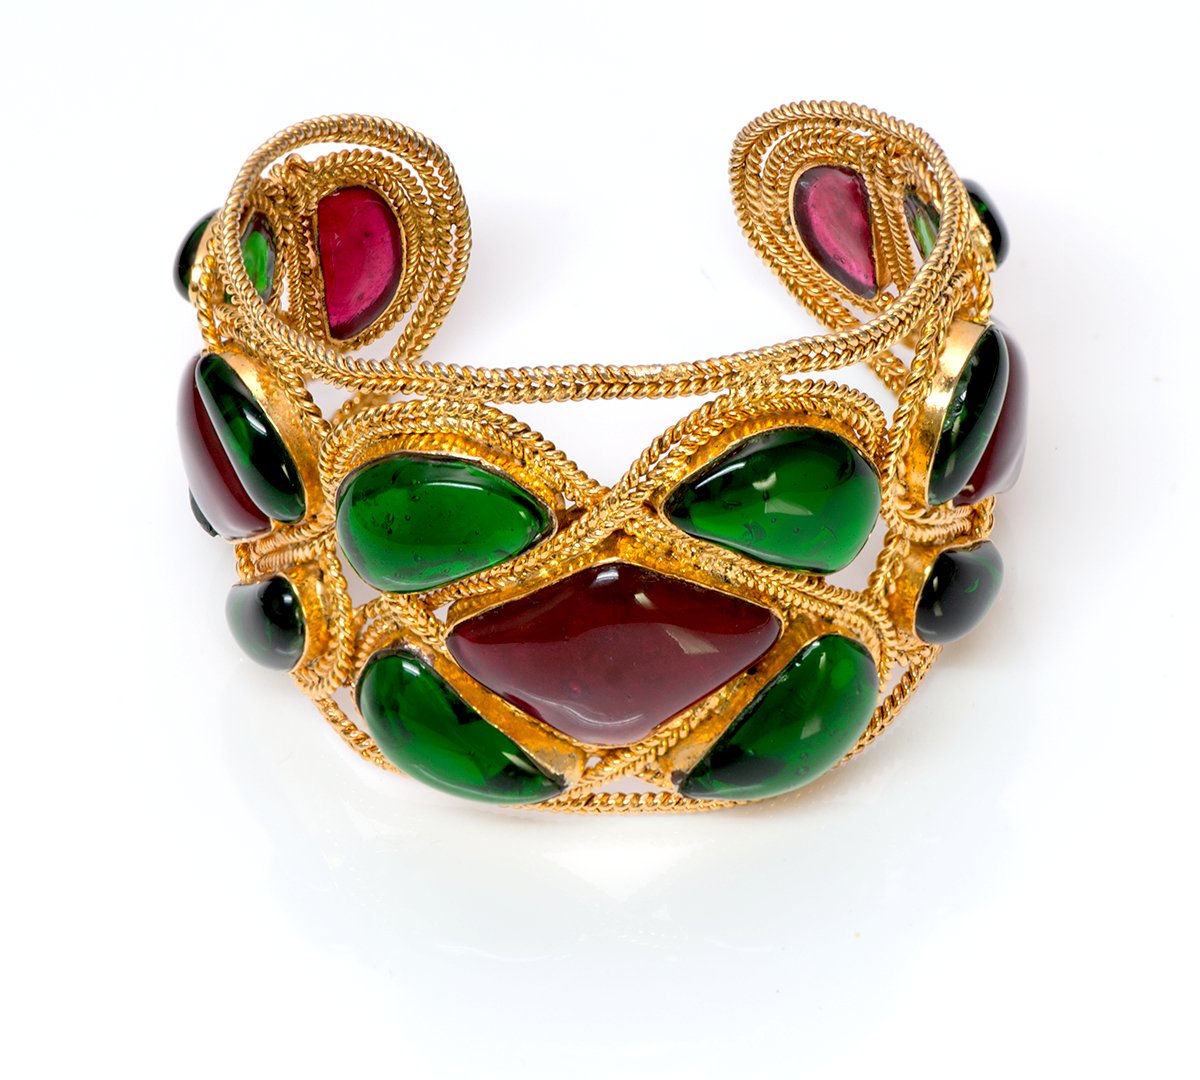 Chanel Maison Gripoix Byzantine Style Cuff Bracelet